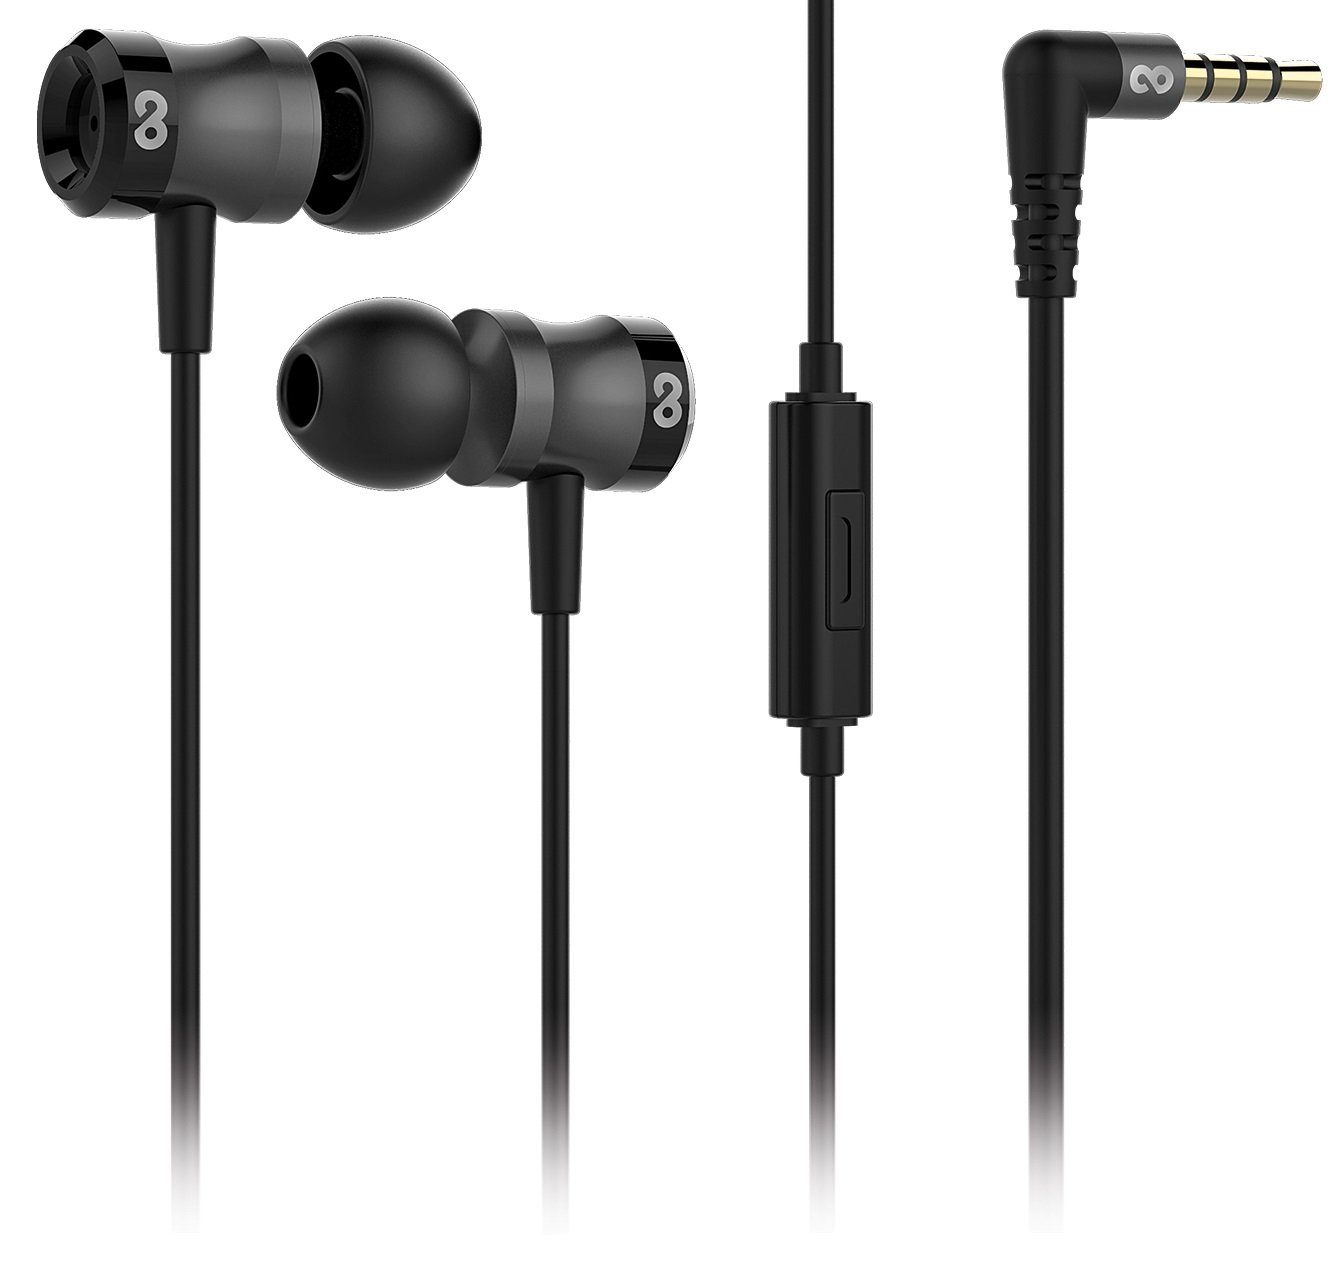 conecto conecto In-Ear Kopfhörer / Earphones mit 3 Ohrpassstücken (optional: In-Ear-Kopfhörer (In-Ear Ohrhörer, Headset) schwarz